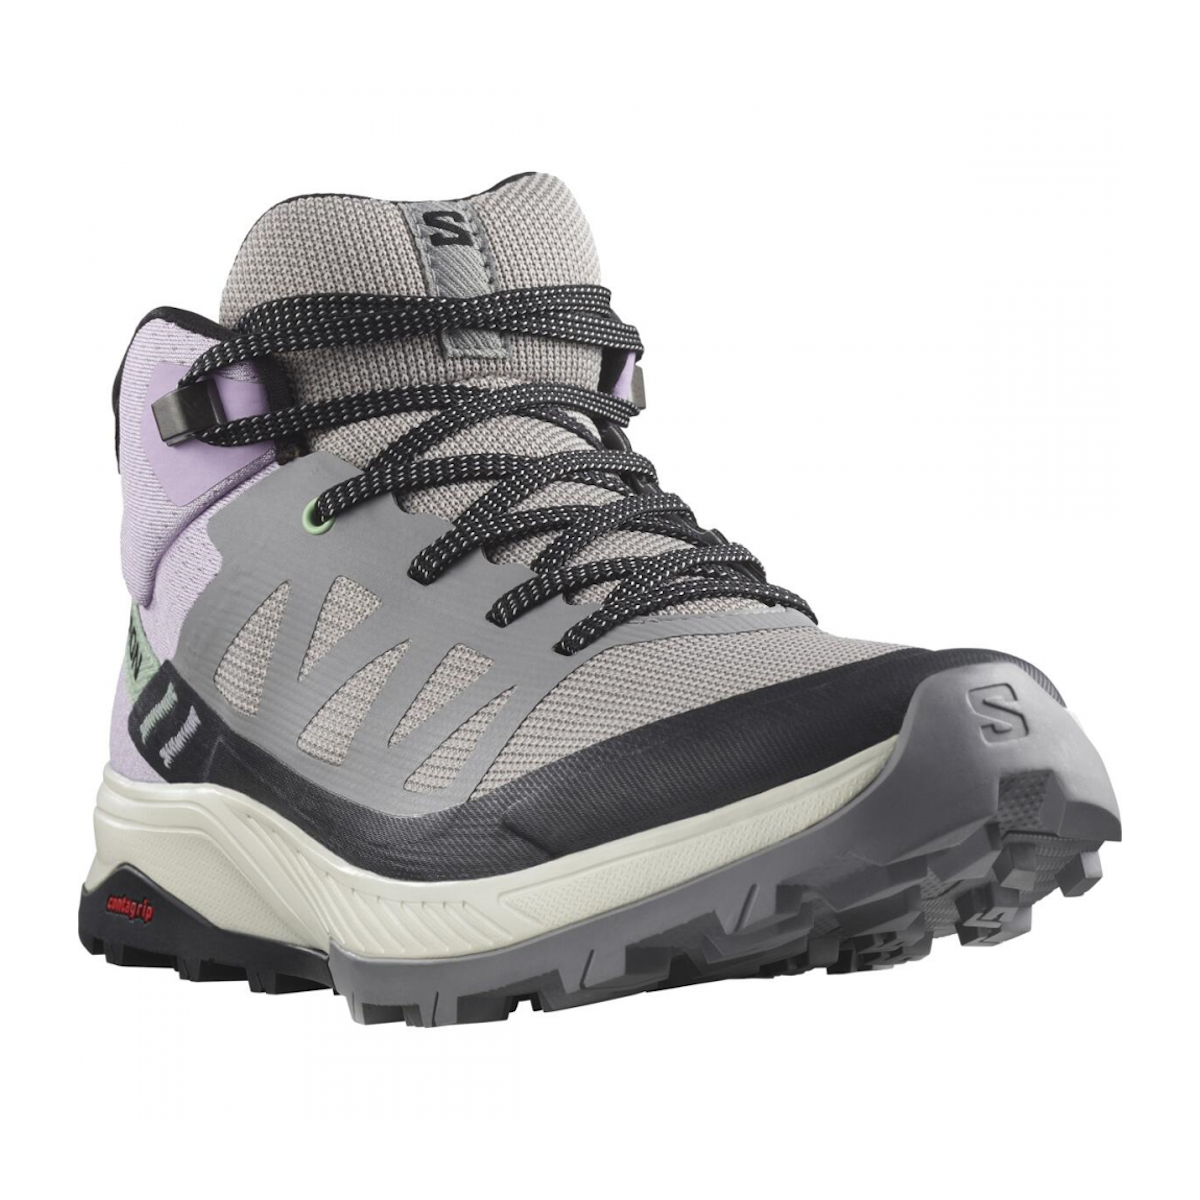 SALOMON OUTRISE MID GTX W hiking boots - pink/grey/black